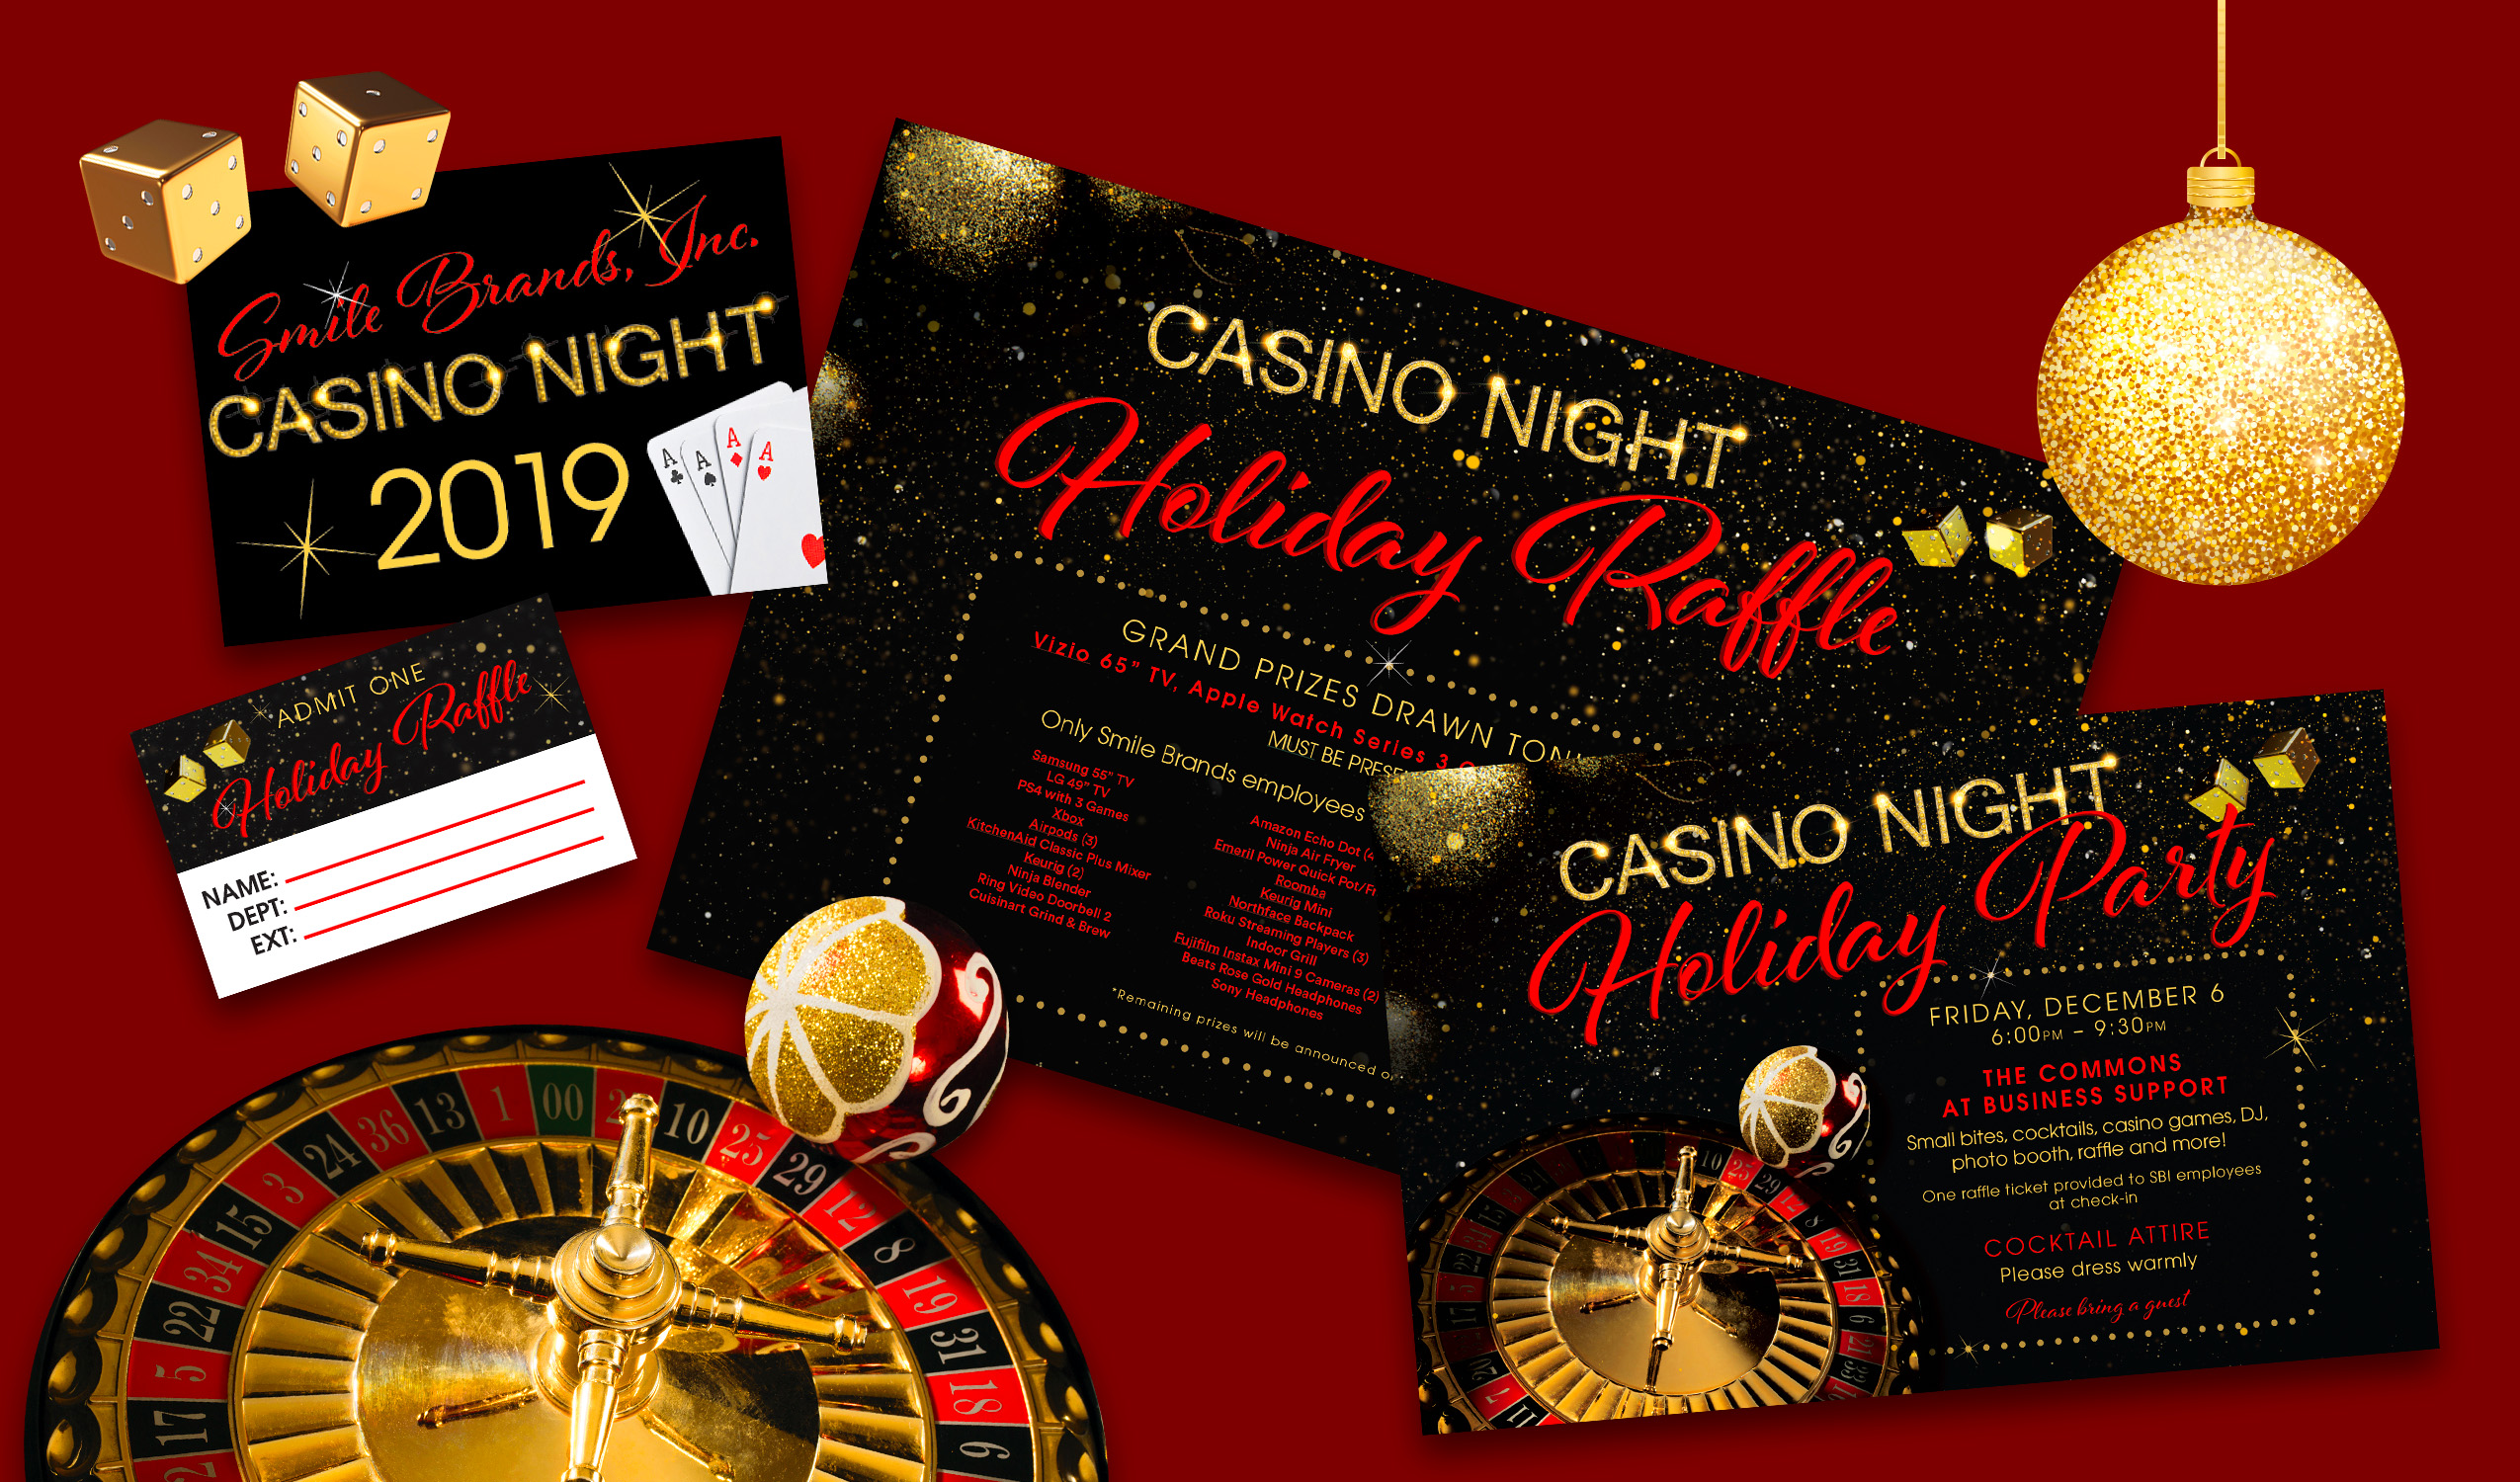 SBI Casino Night Holiday Party.jpg